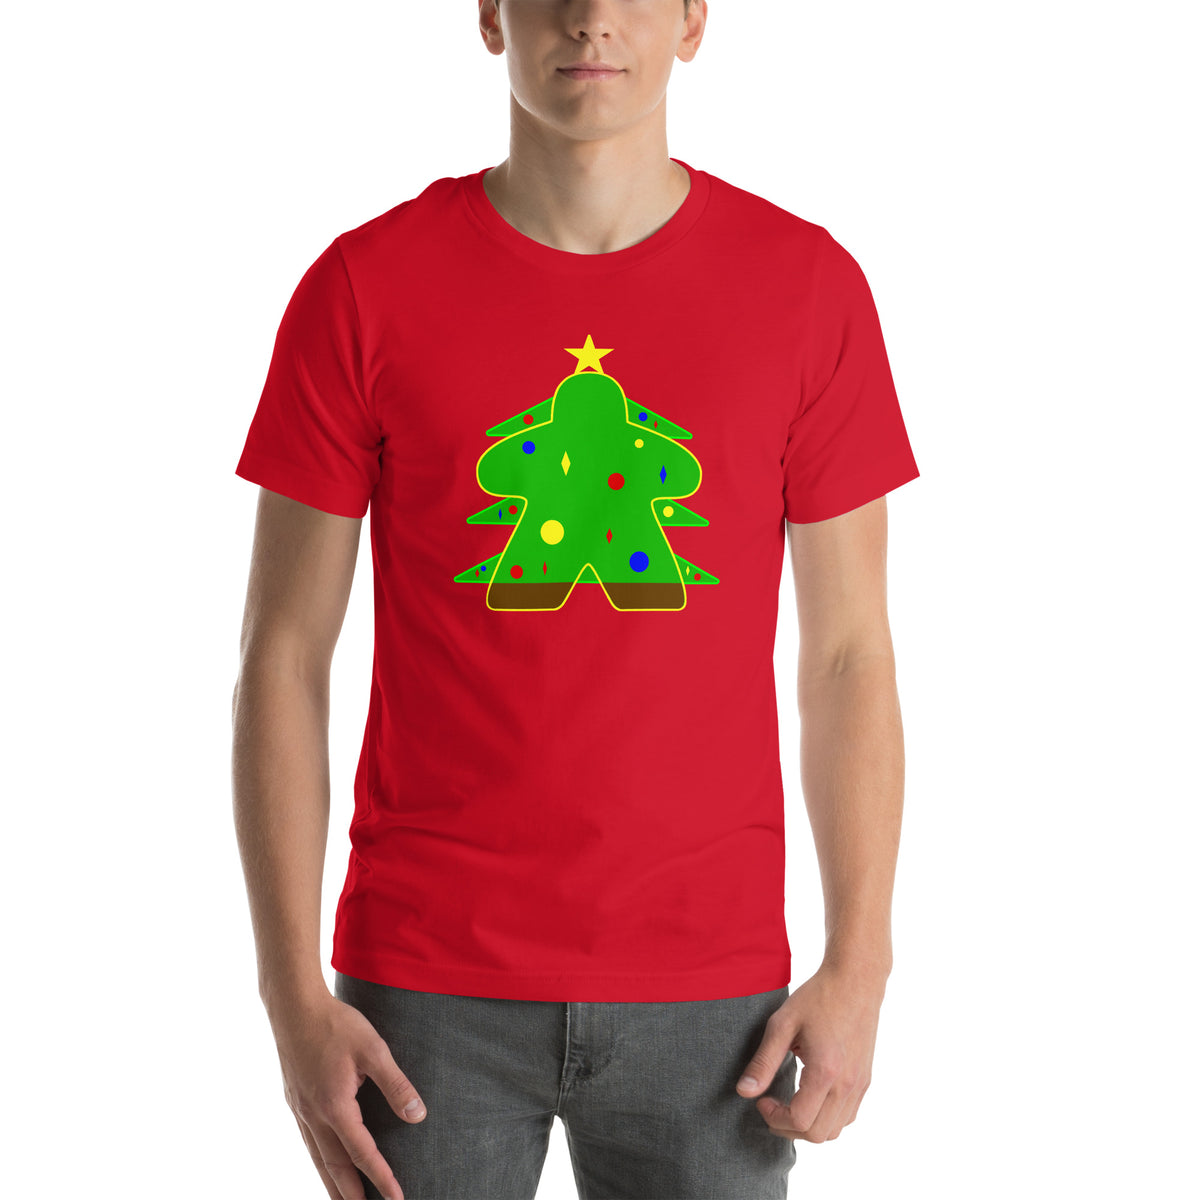 Green Meeple Christmas Tree T-Shirt